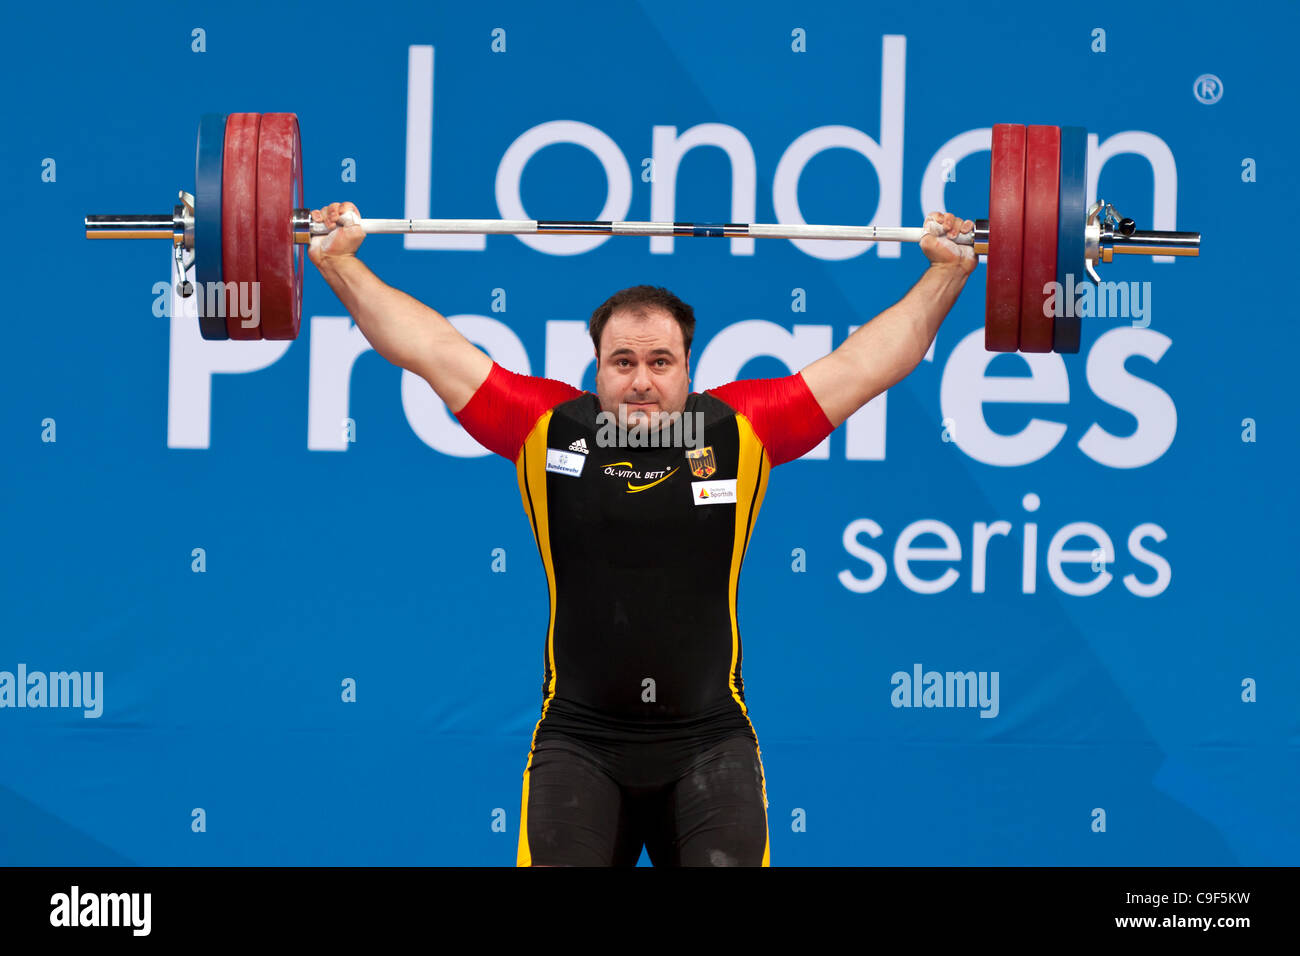 Almir VELAGIC of Germany competing in the Men's +105kg London Prepares Weightlifting International Invitational, 10–11 Dec 11, ExCel, London, UK. Stock Photo